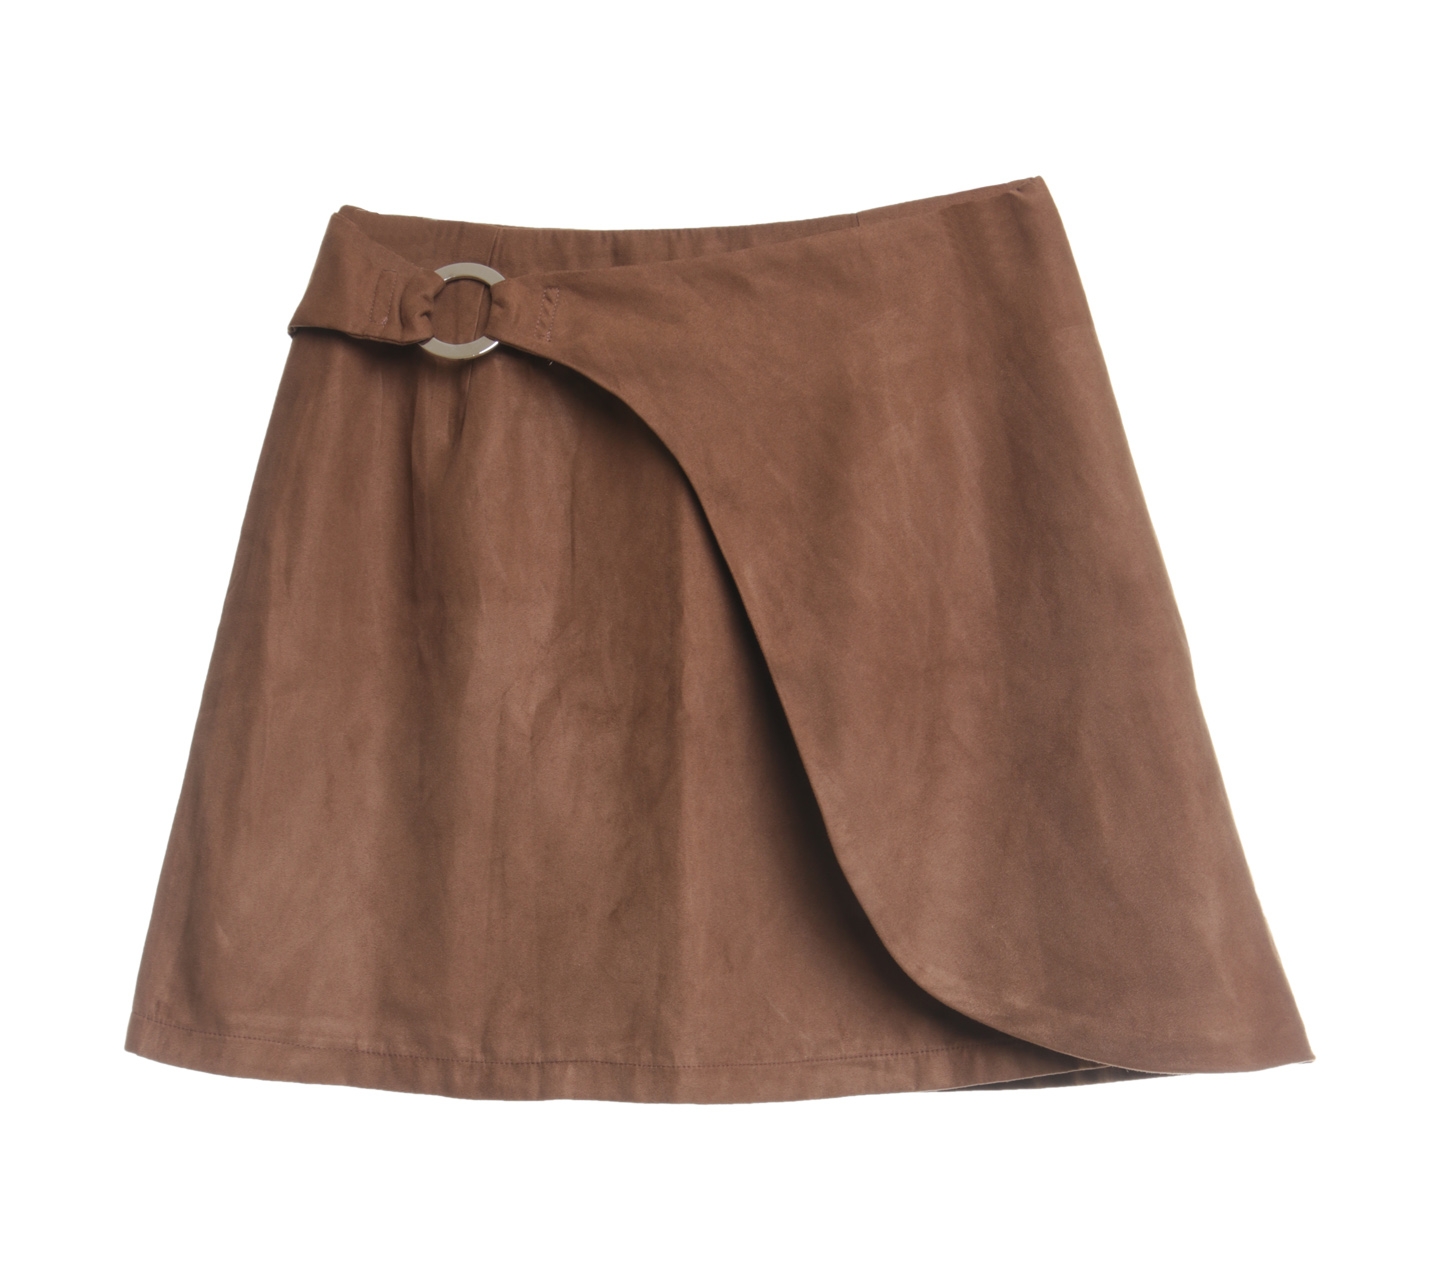 The Pixi Rock Brown Mini Skirt